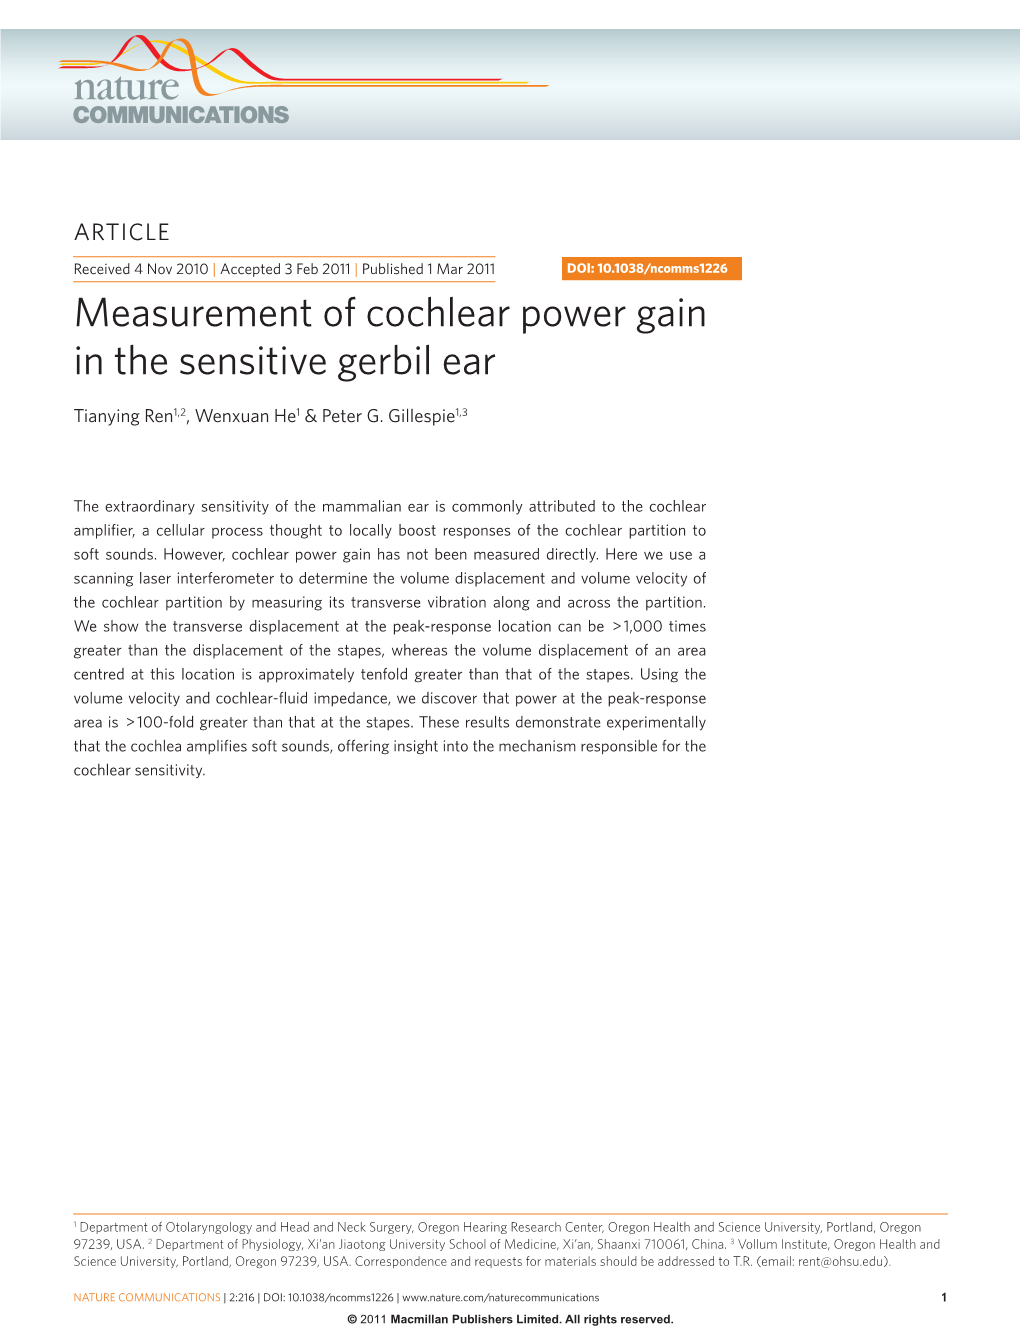 Measurement of Cochlear Power Gain in the Sensitive Gerbil Ear